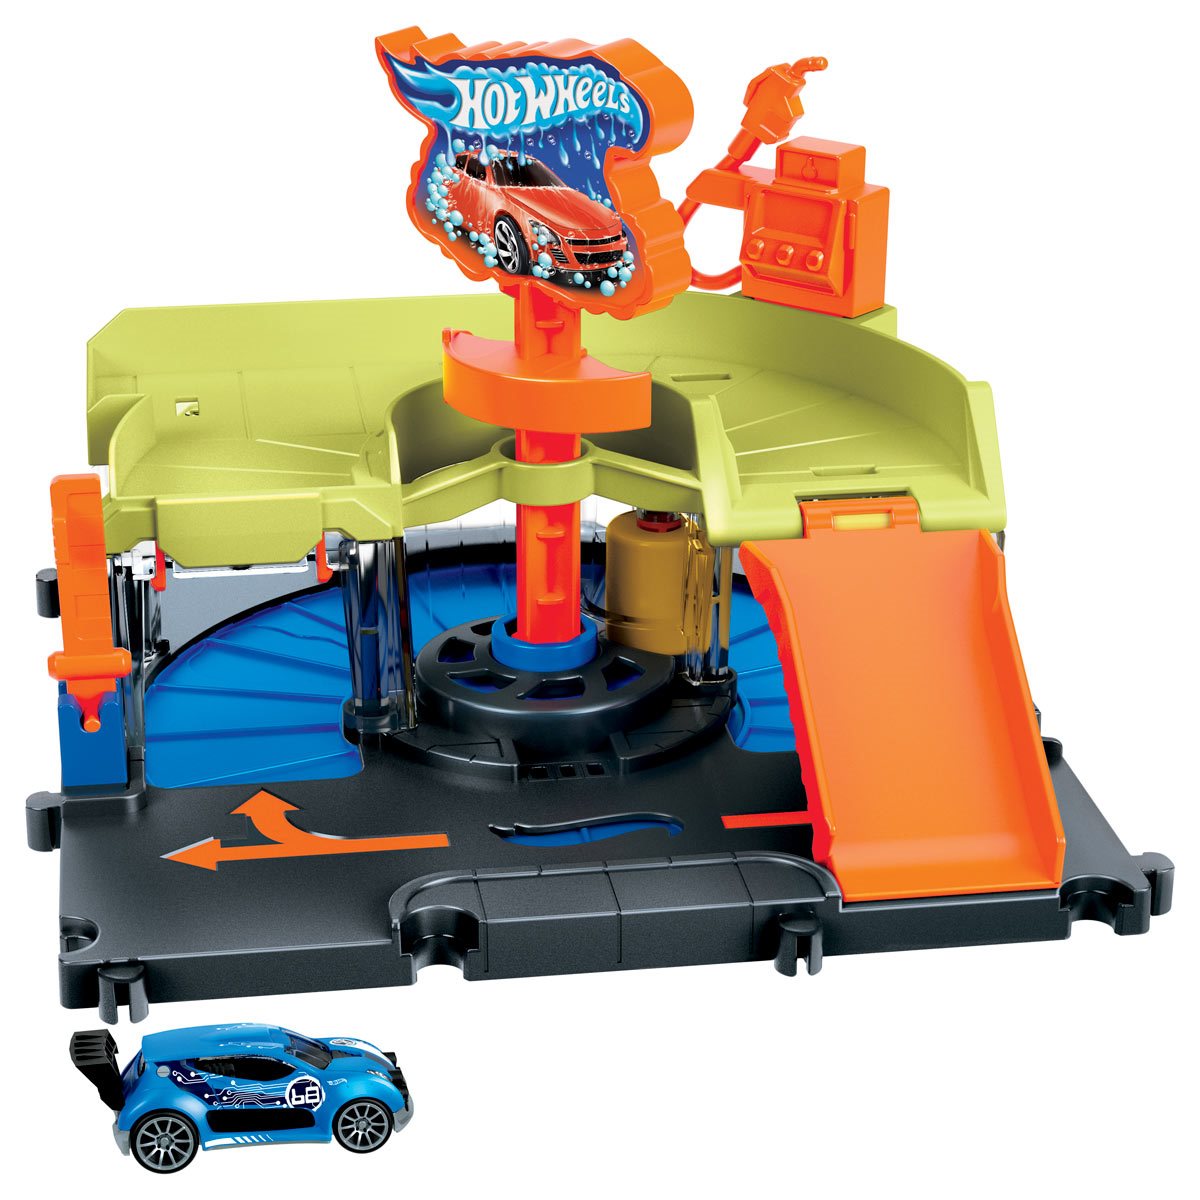  Hot Wheels Toy Car Track Set, Rapid Raceway Champion